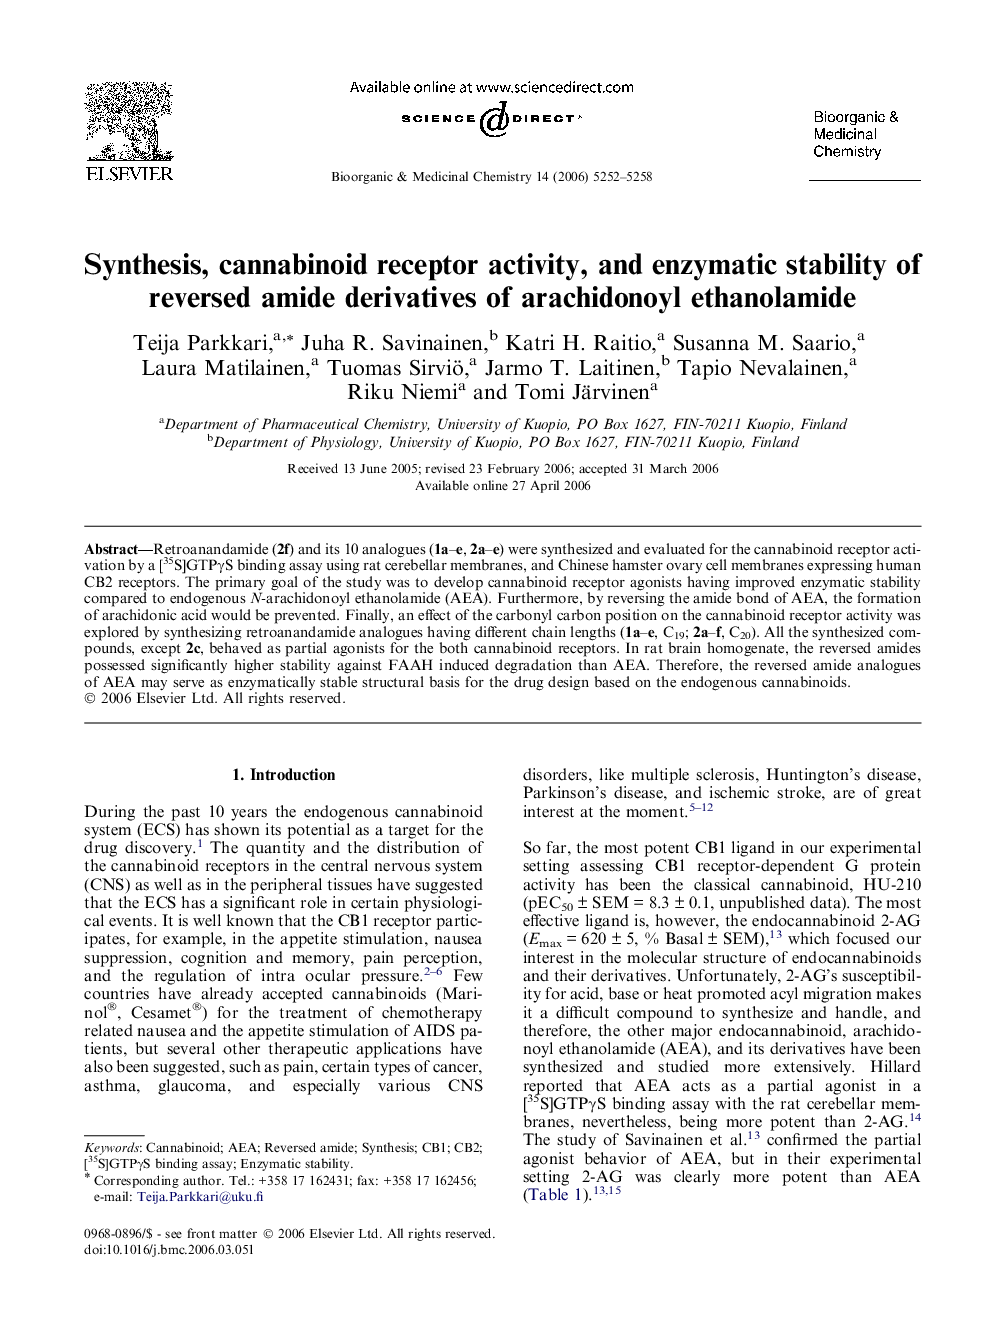 Synthesis, cannabinoid receptor activity, and enzymatic stability of reversed amide derivatives of arachidonoyl ethanolamide